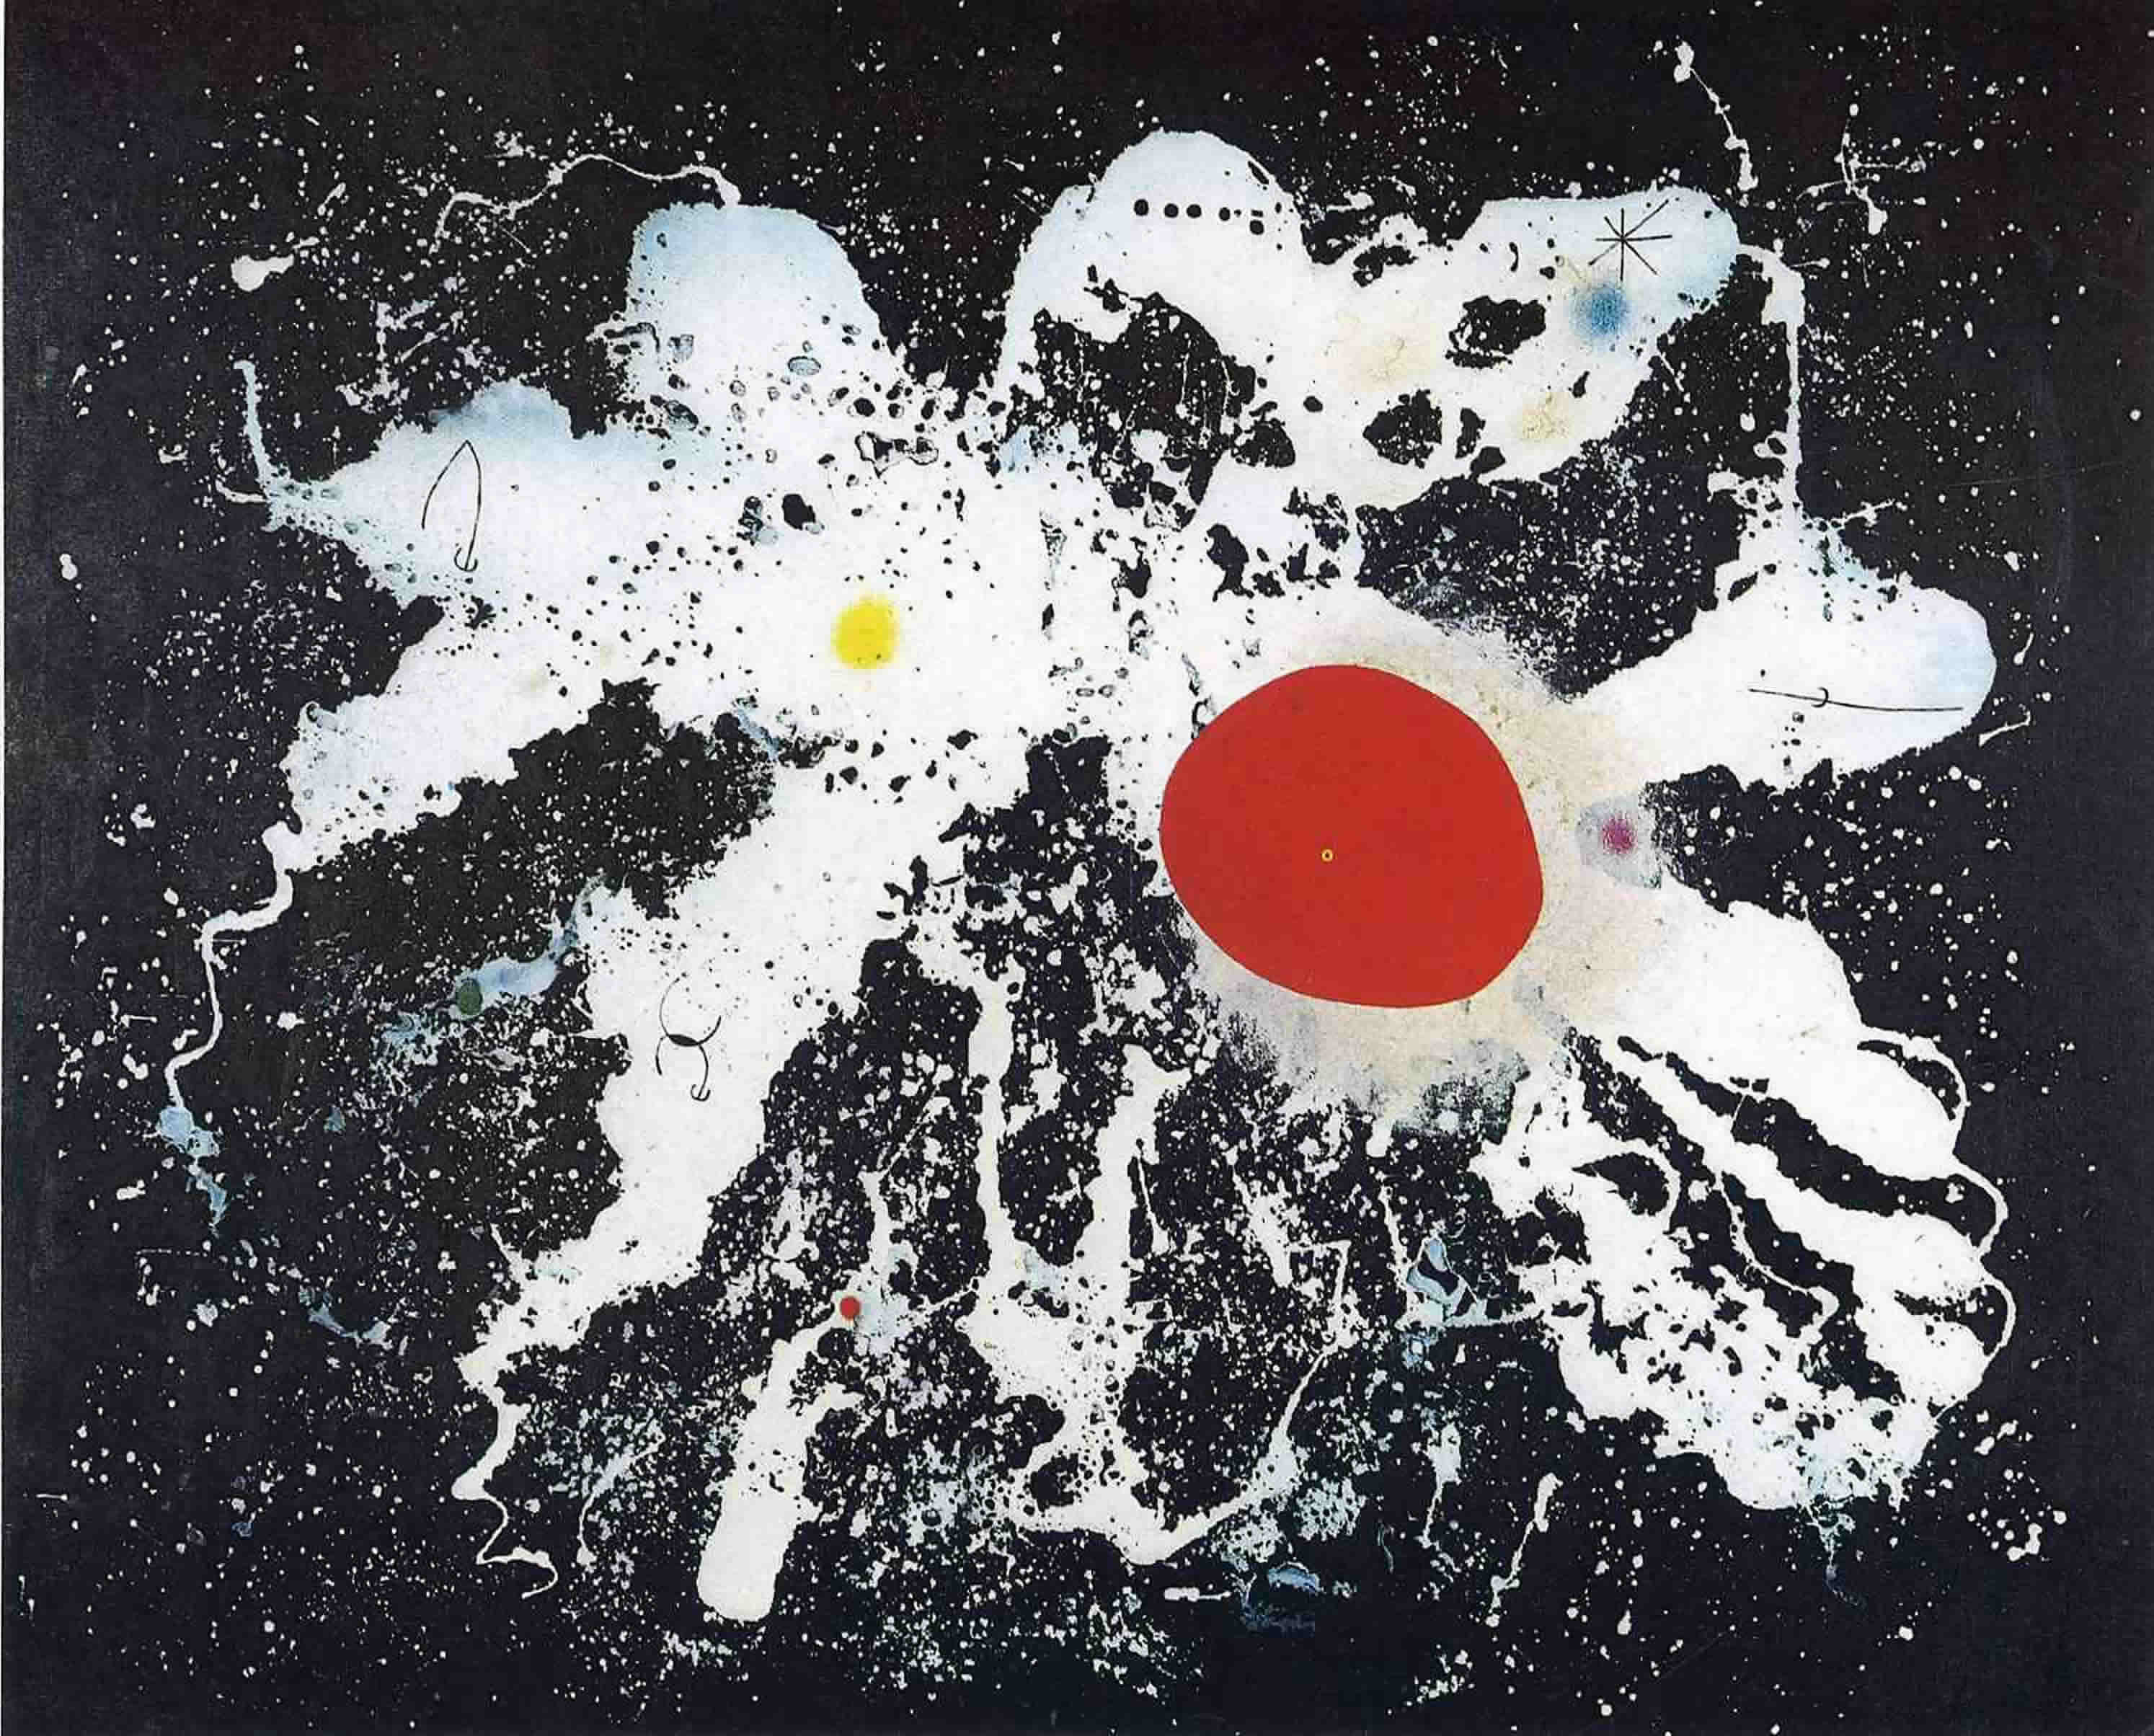 The Red Disc Joan Miro Wallpaper Image